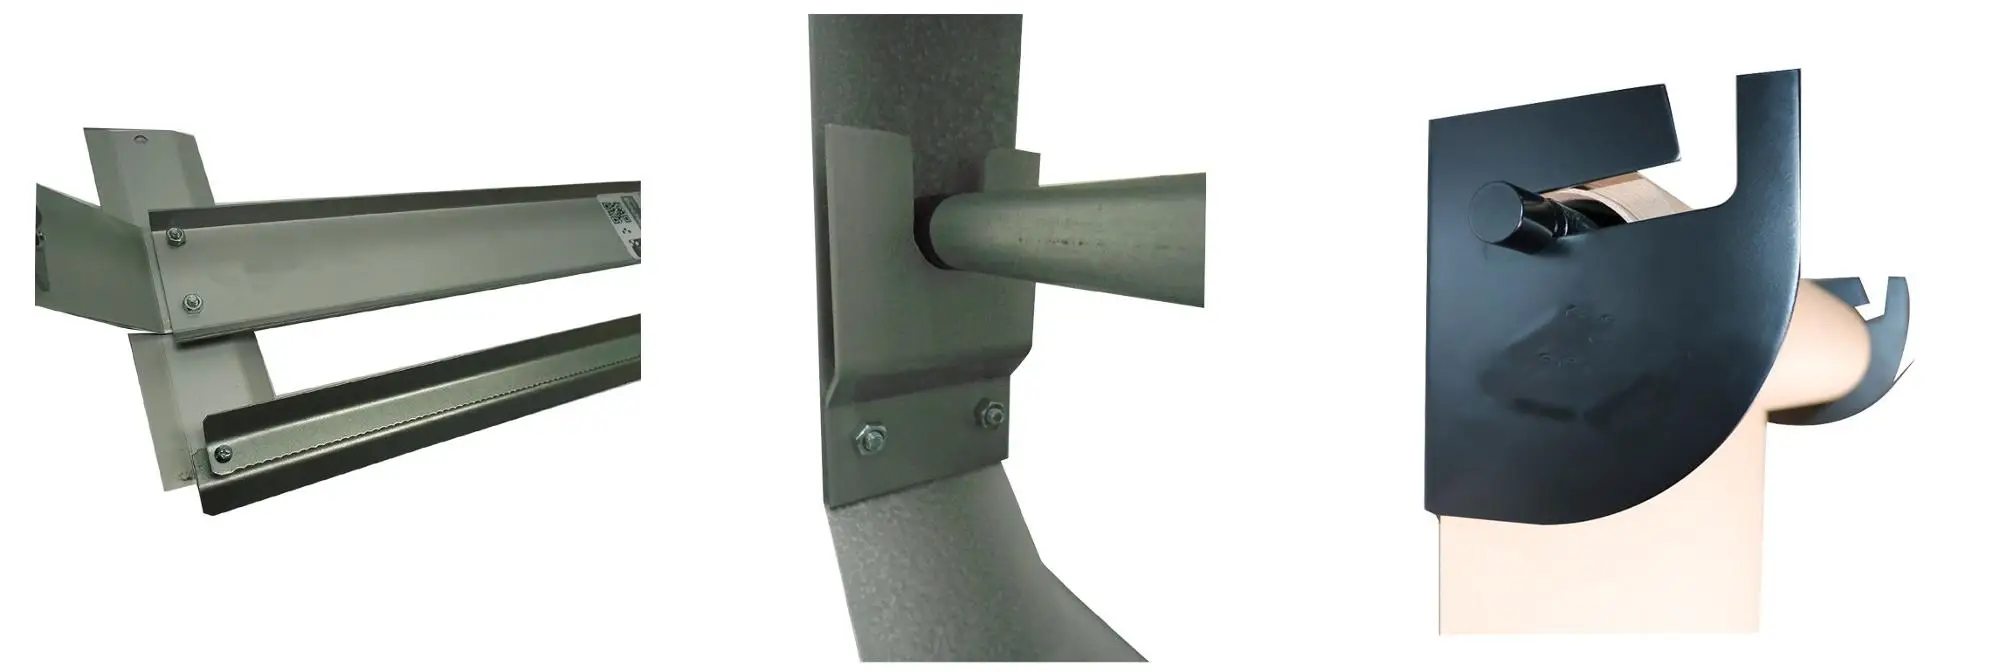 Standard 24" White Steel All-In-One Paper Dispenser / Cutter